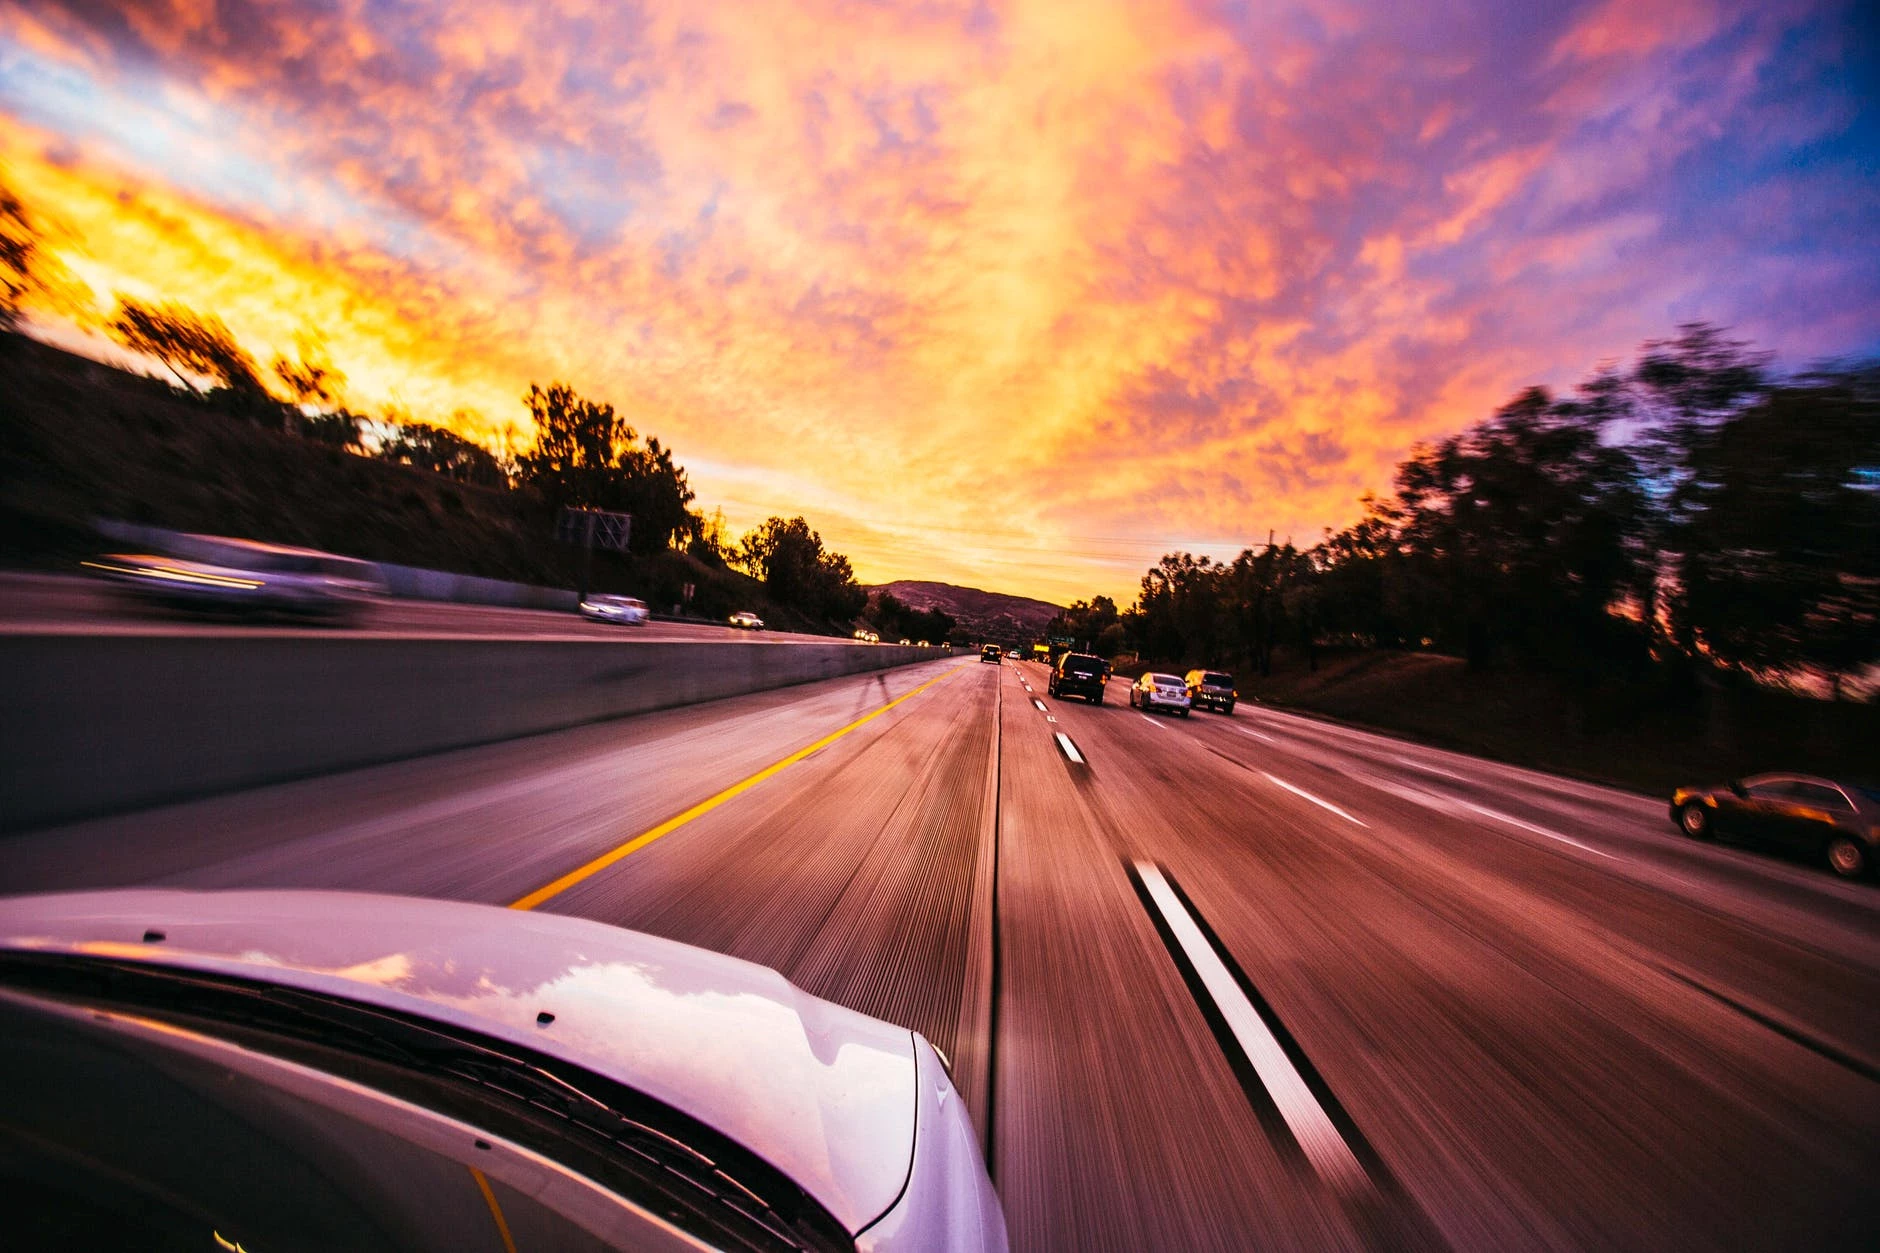 A car speeding on a motorway at sunset